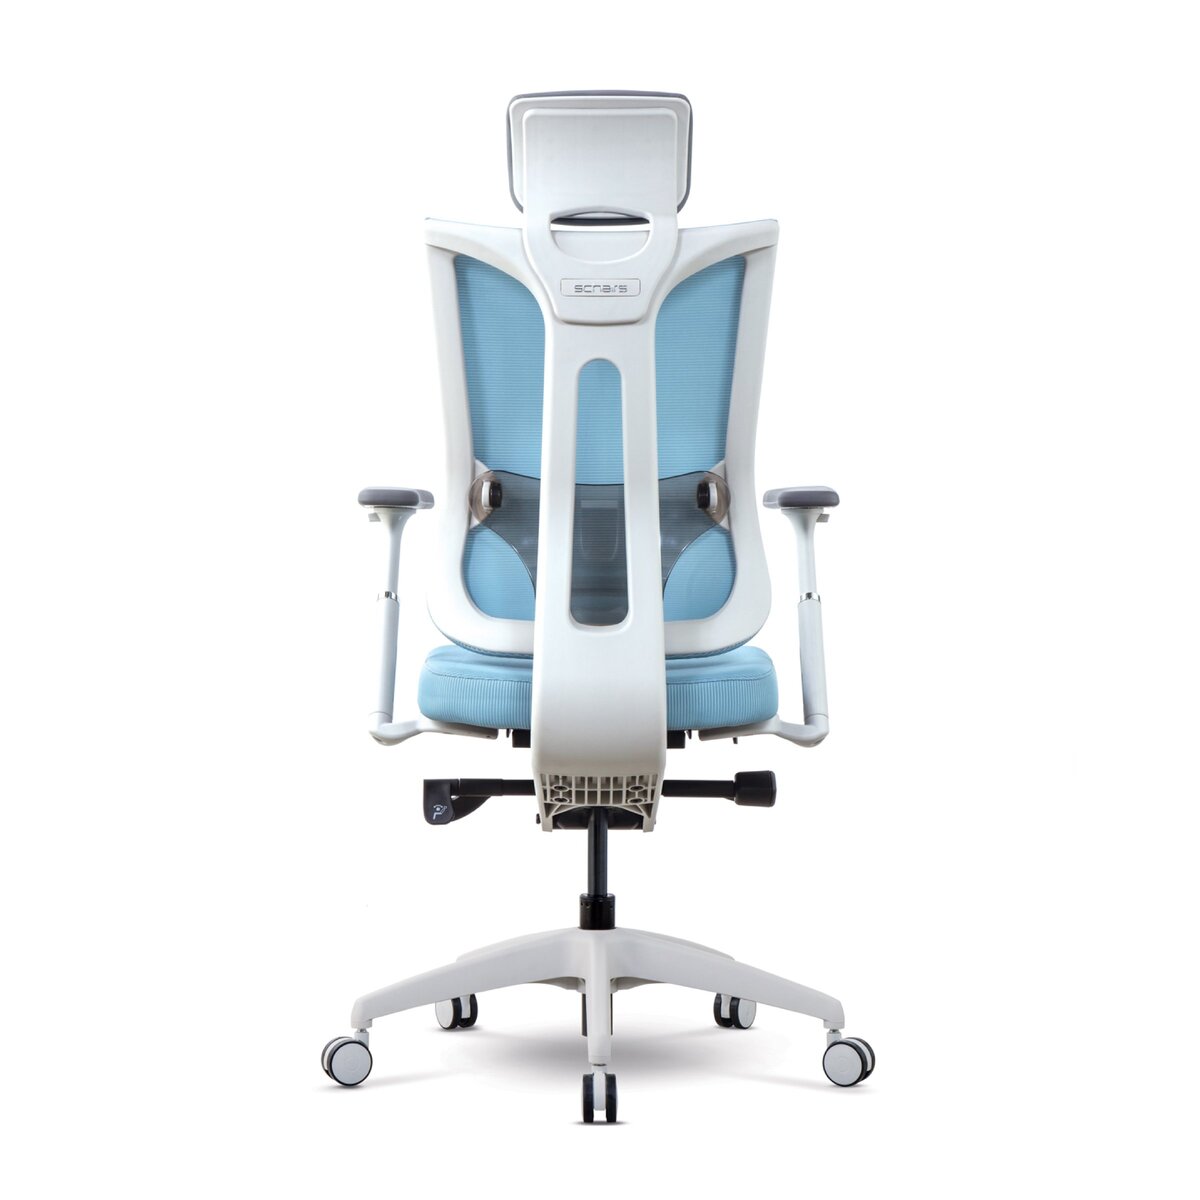 M tone. Офисное кресло schairs ton-m01. Кресло для офиса schairs Tone-f01b. Кресло для офиса schairs Tone-f01b, цвет: зелёный. Schairs Zenith.